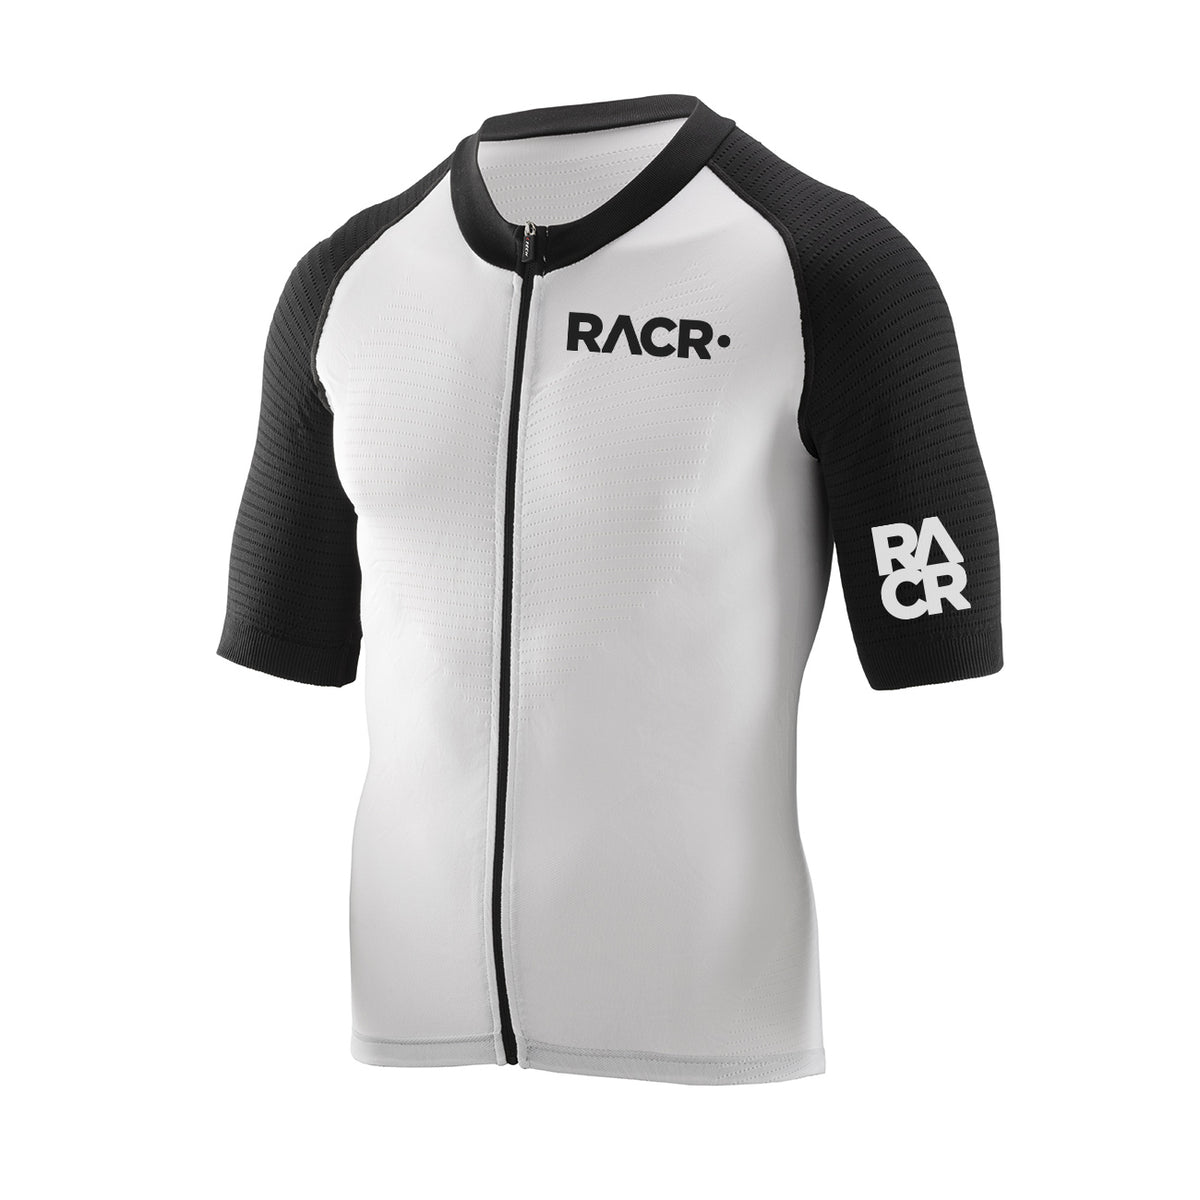 Maglia da ciclismo X-tech RACR• bianca